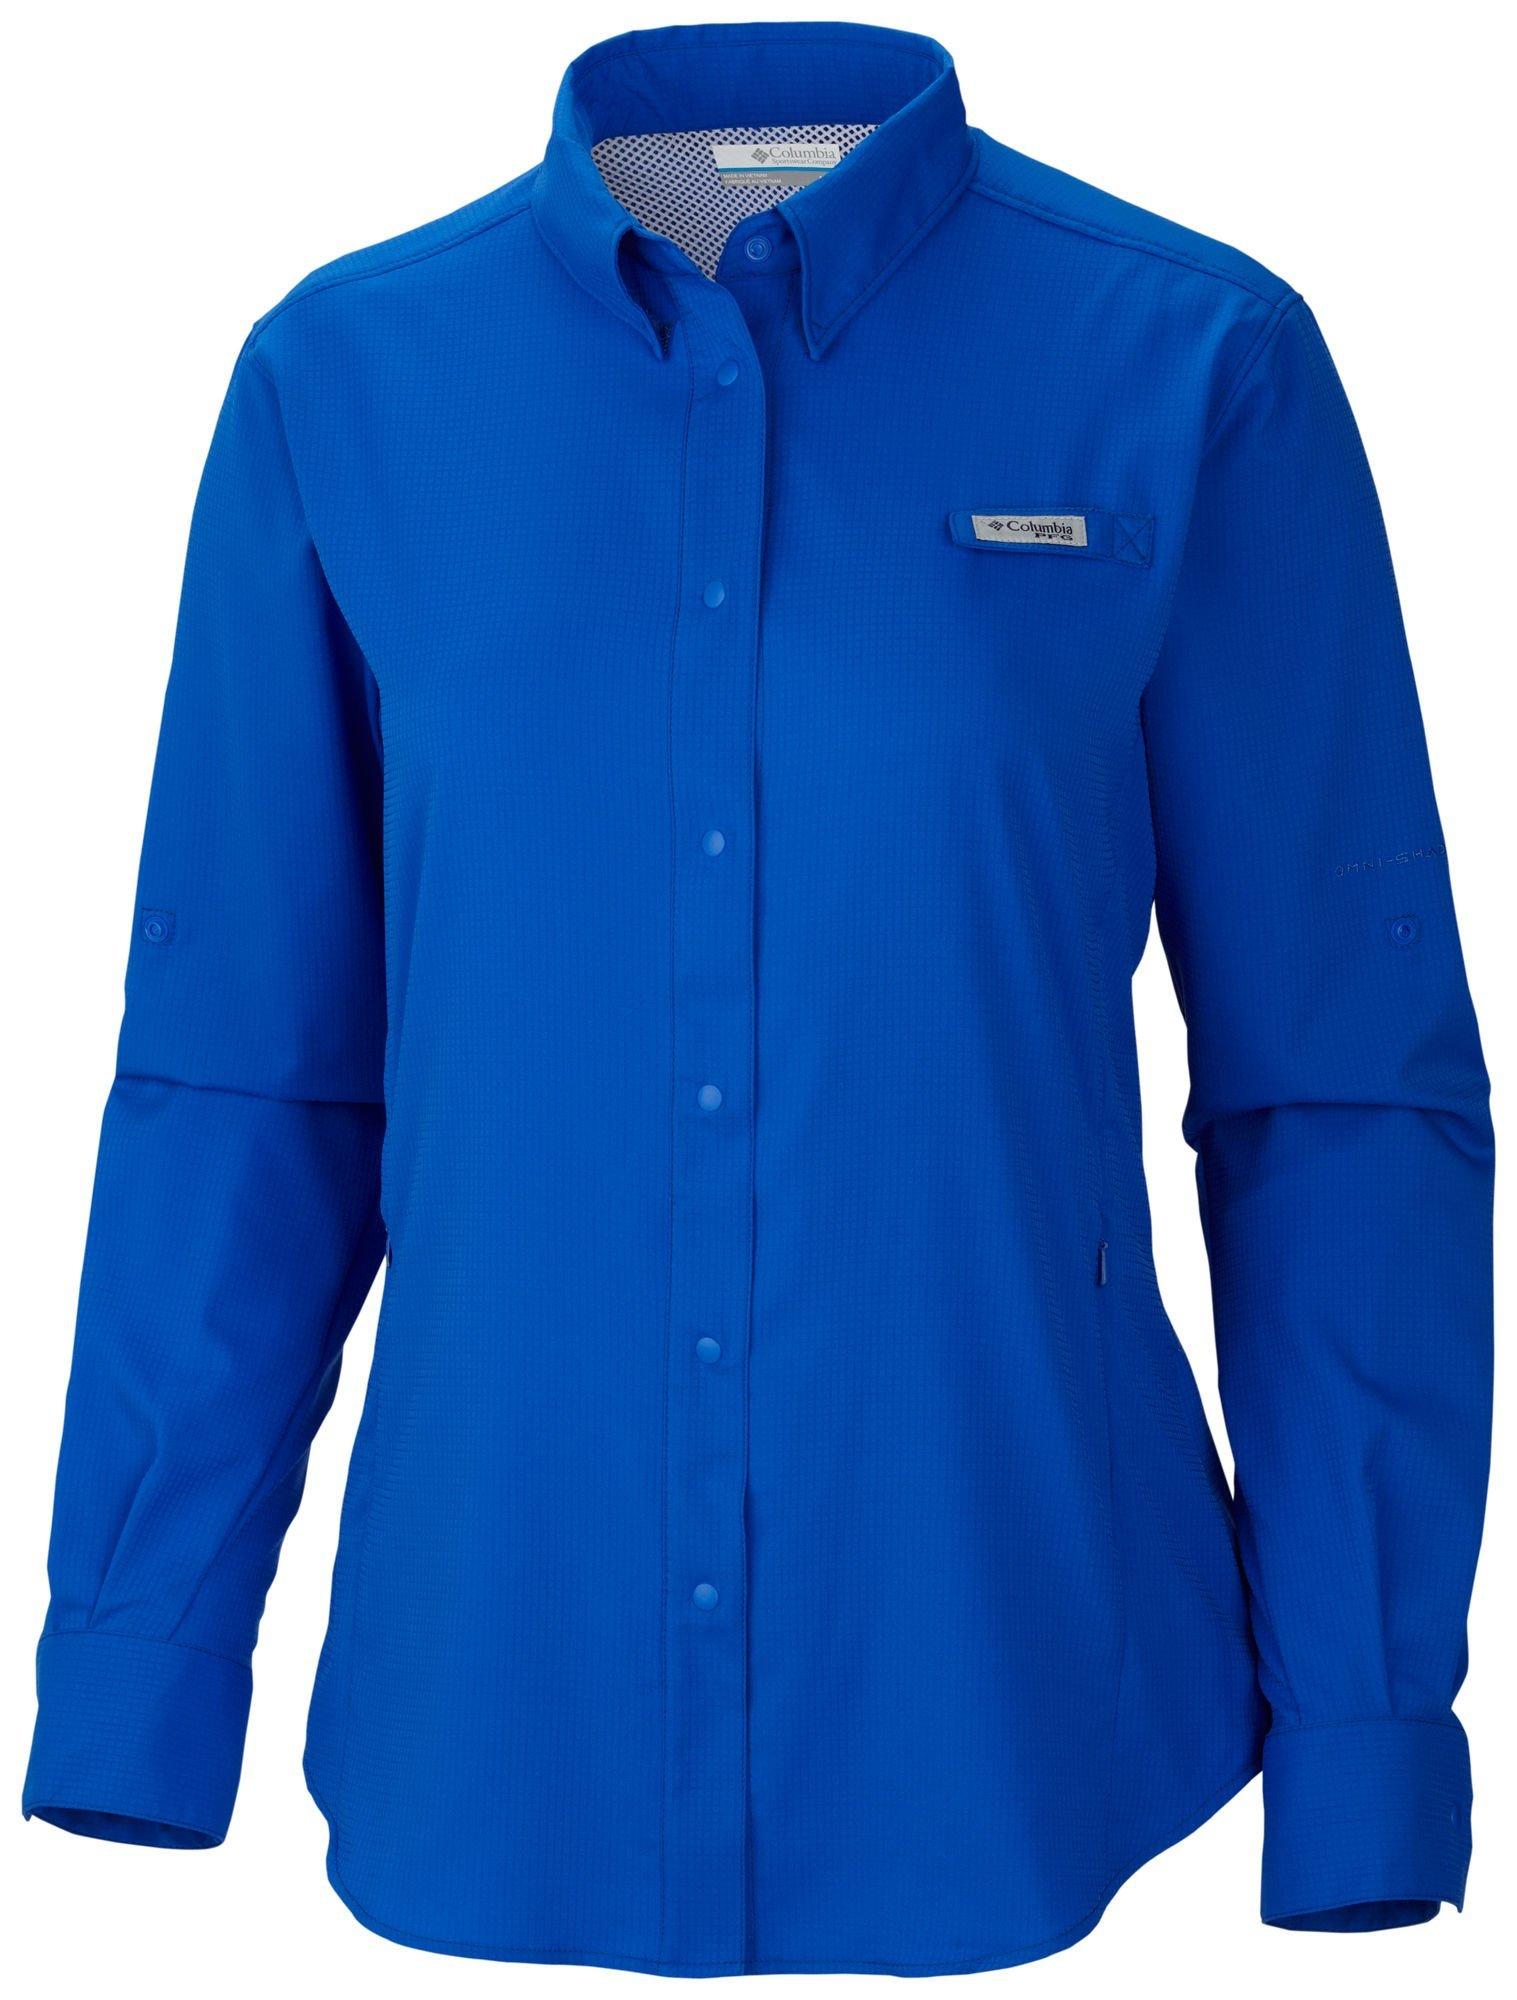 Columbia Women's PFG Tamiami II Long Sleeve Shirt, Medium, Blue